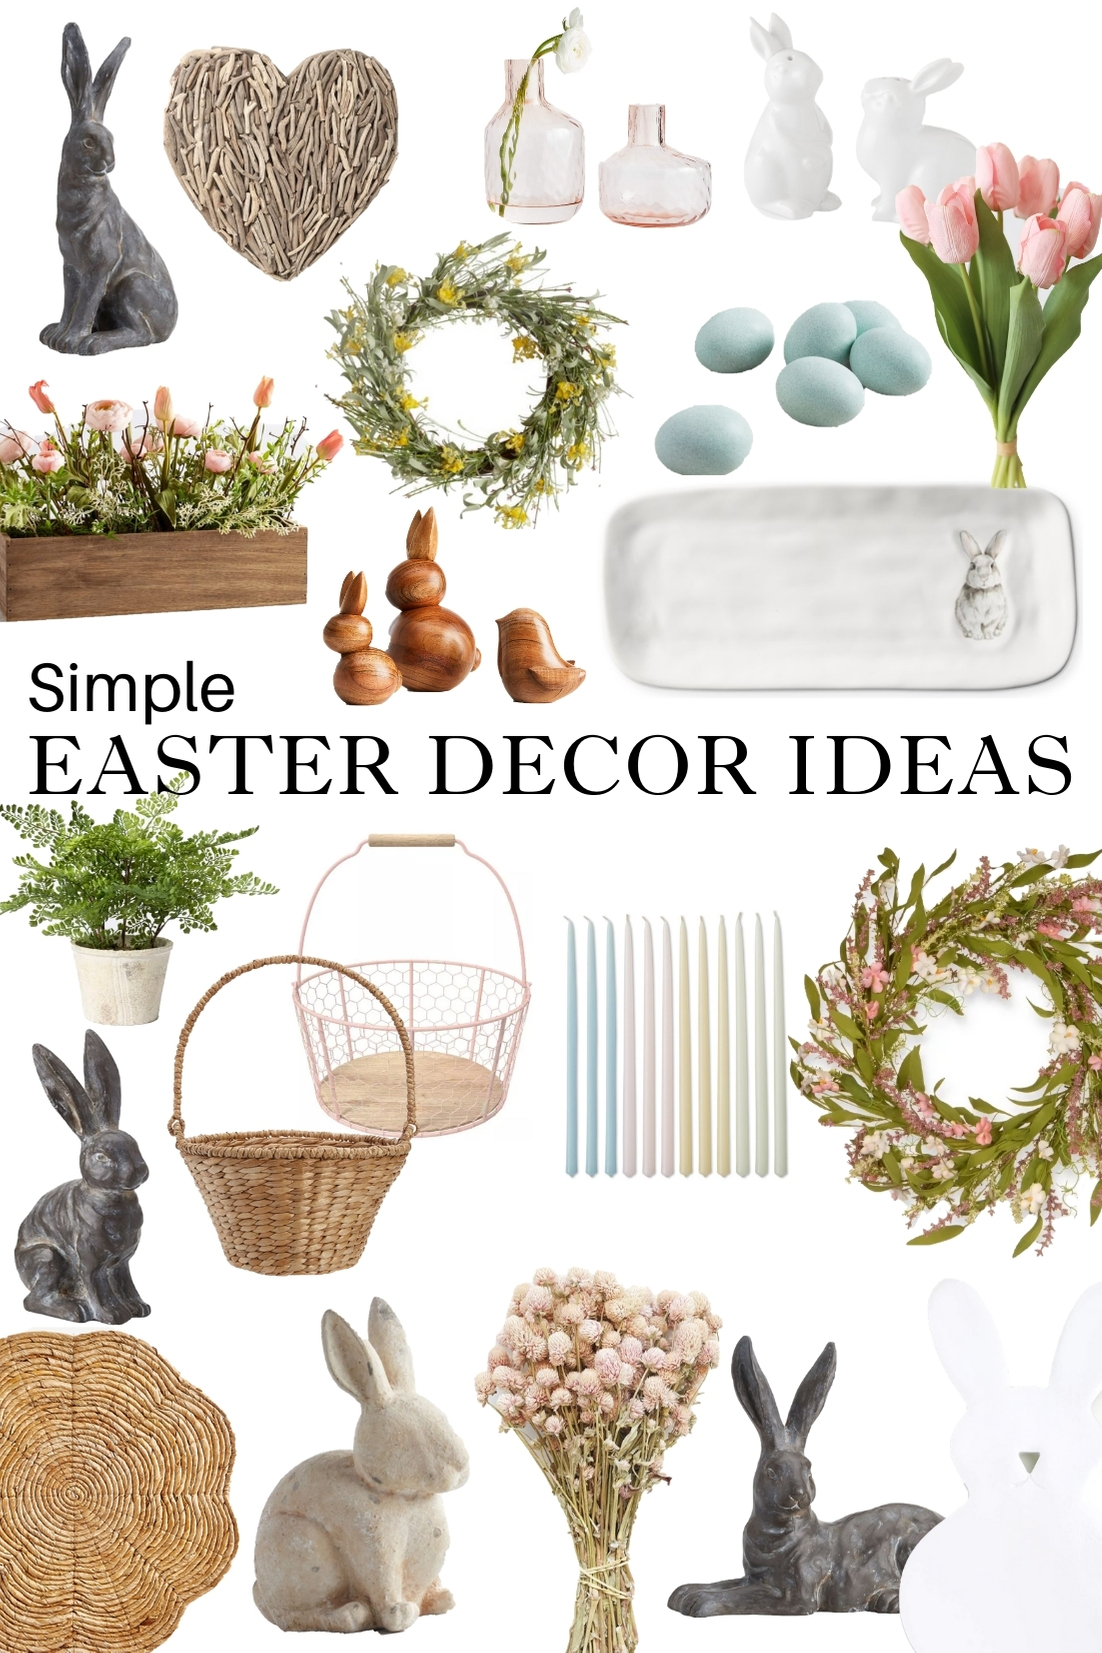 Simple Easter decor ideas